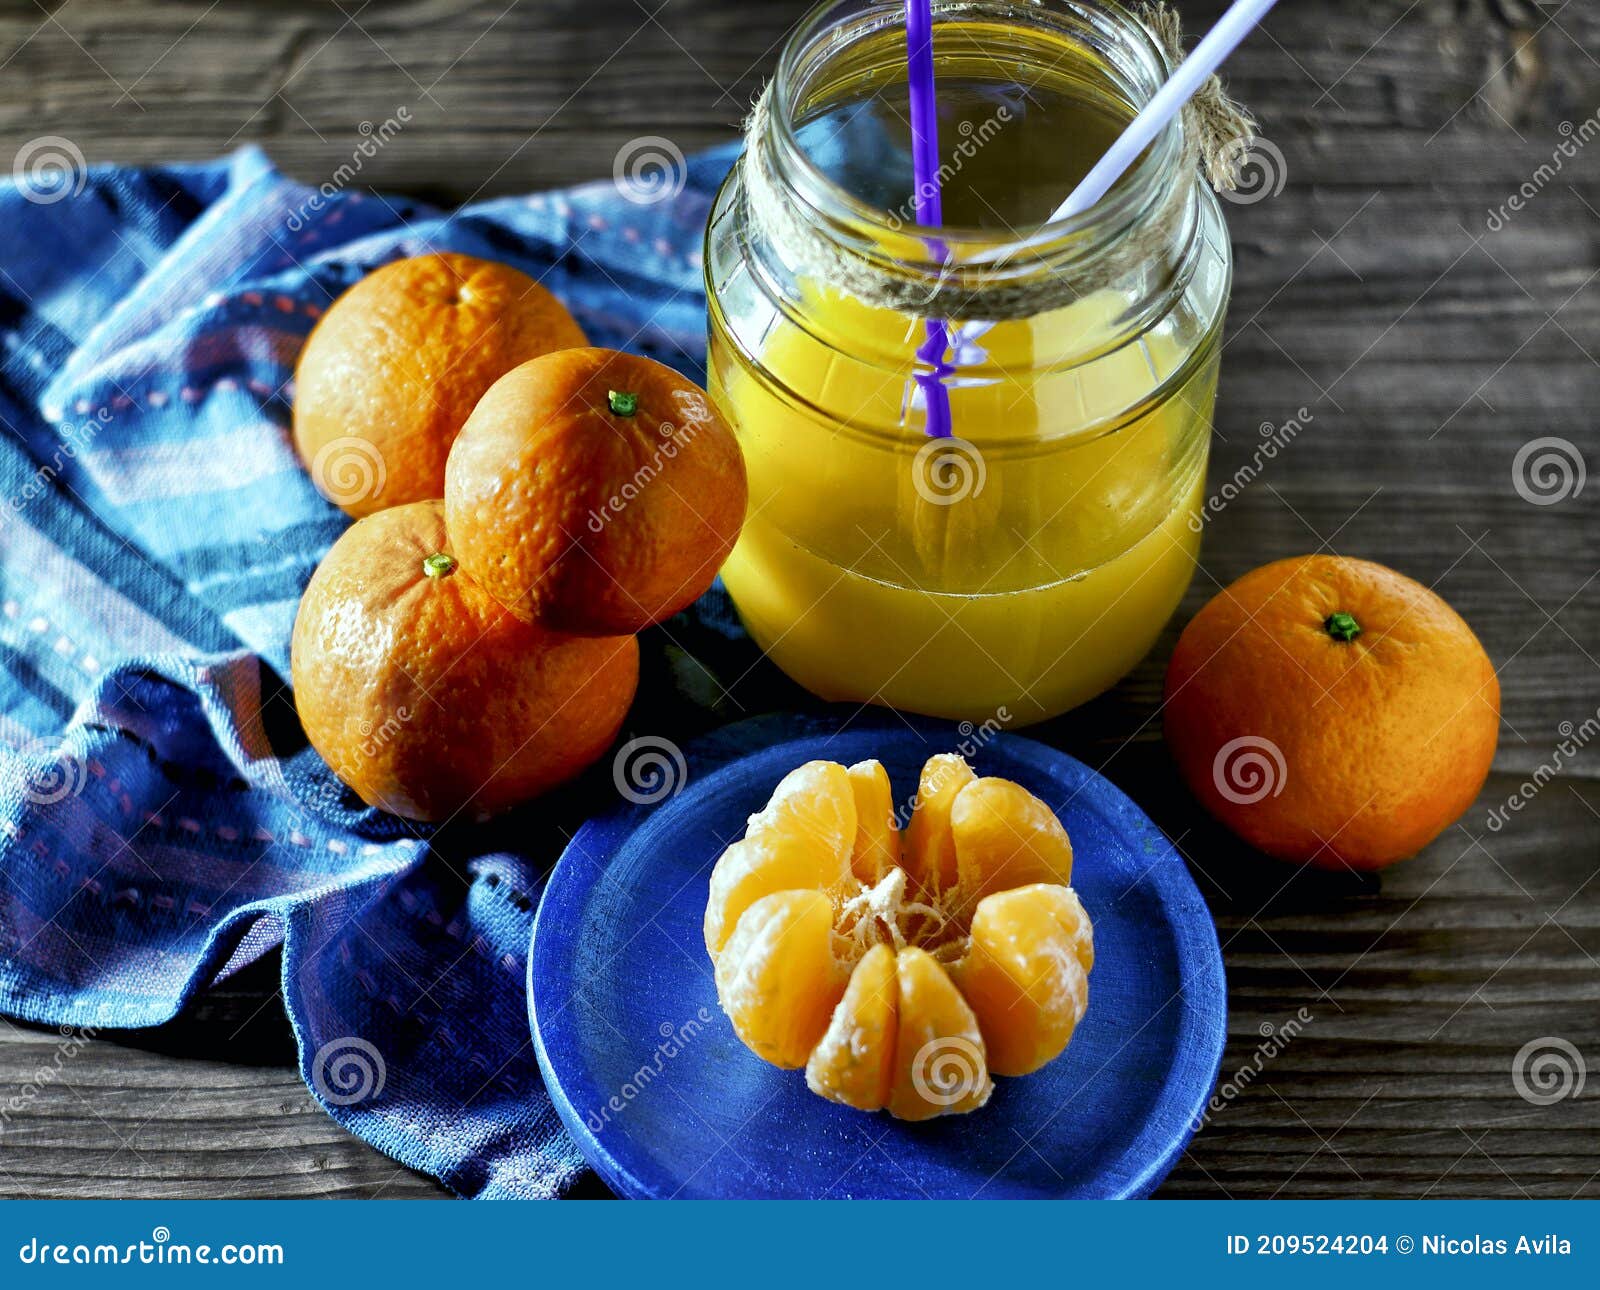 mandarins and glass jar with juice